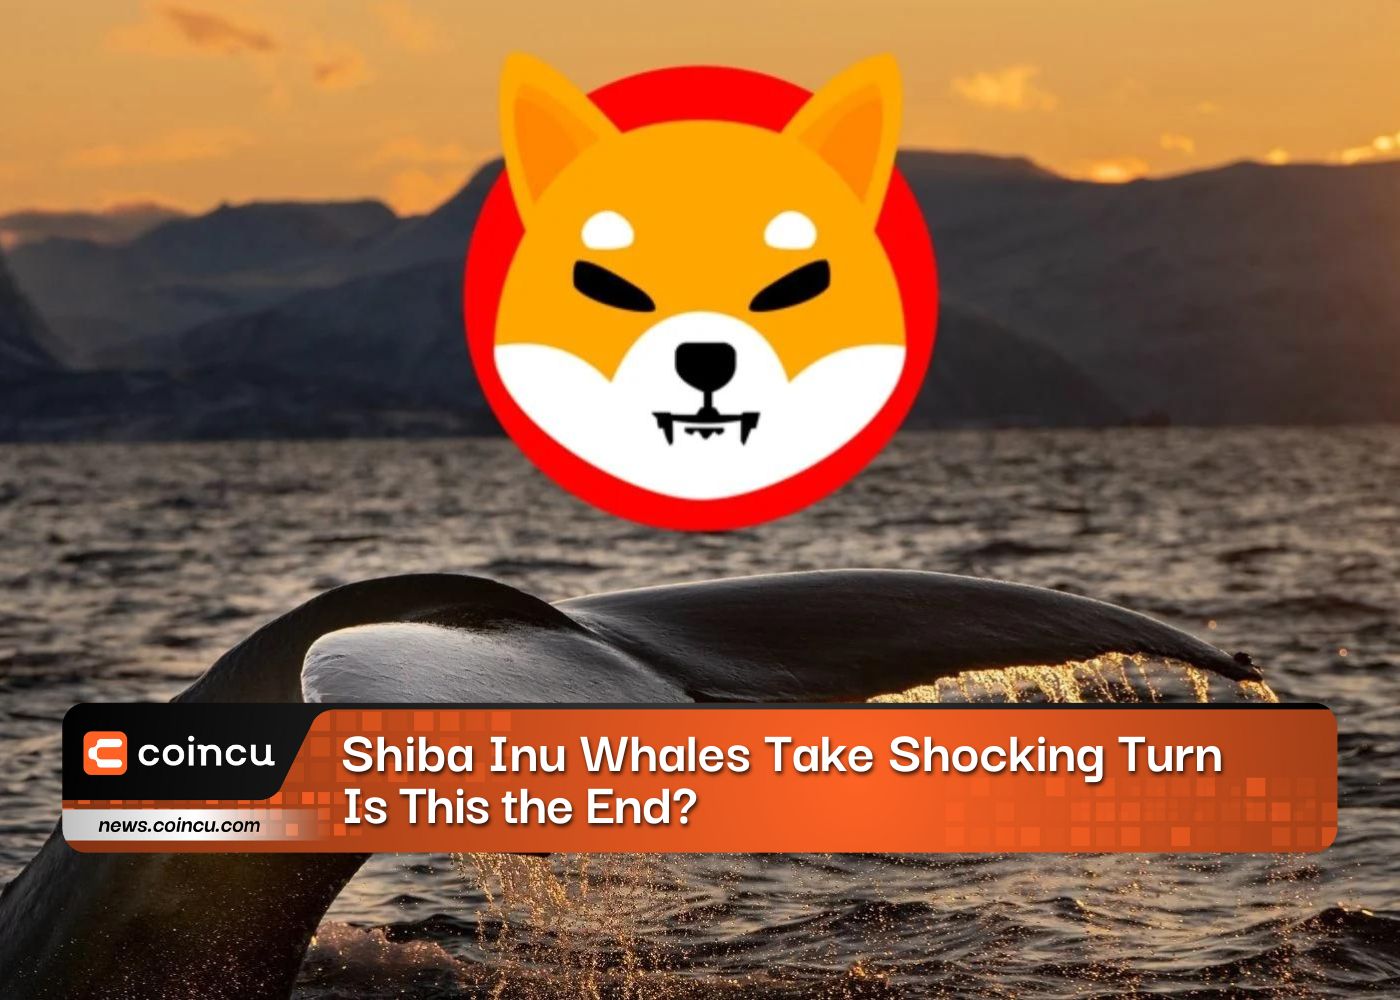 Shiba Inu Whales Take Shocking Turn